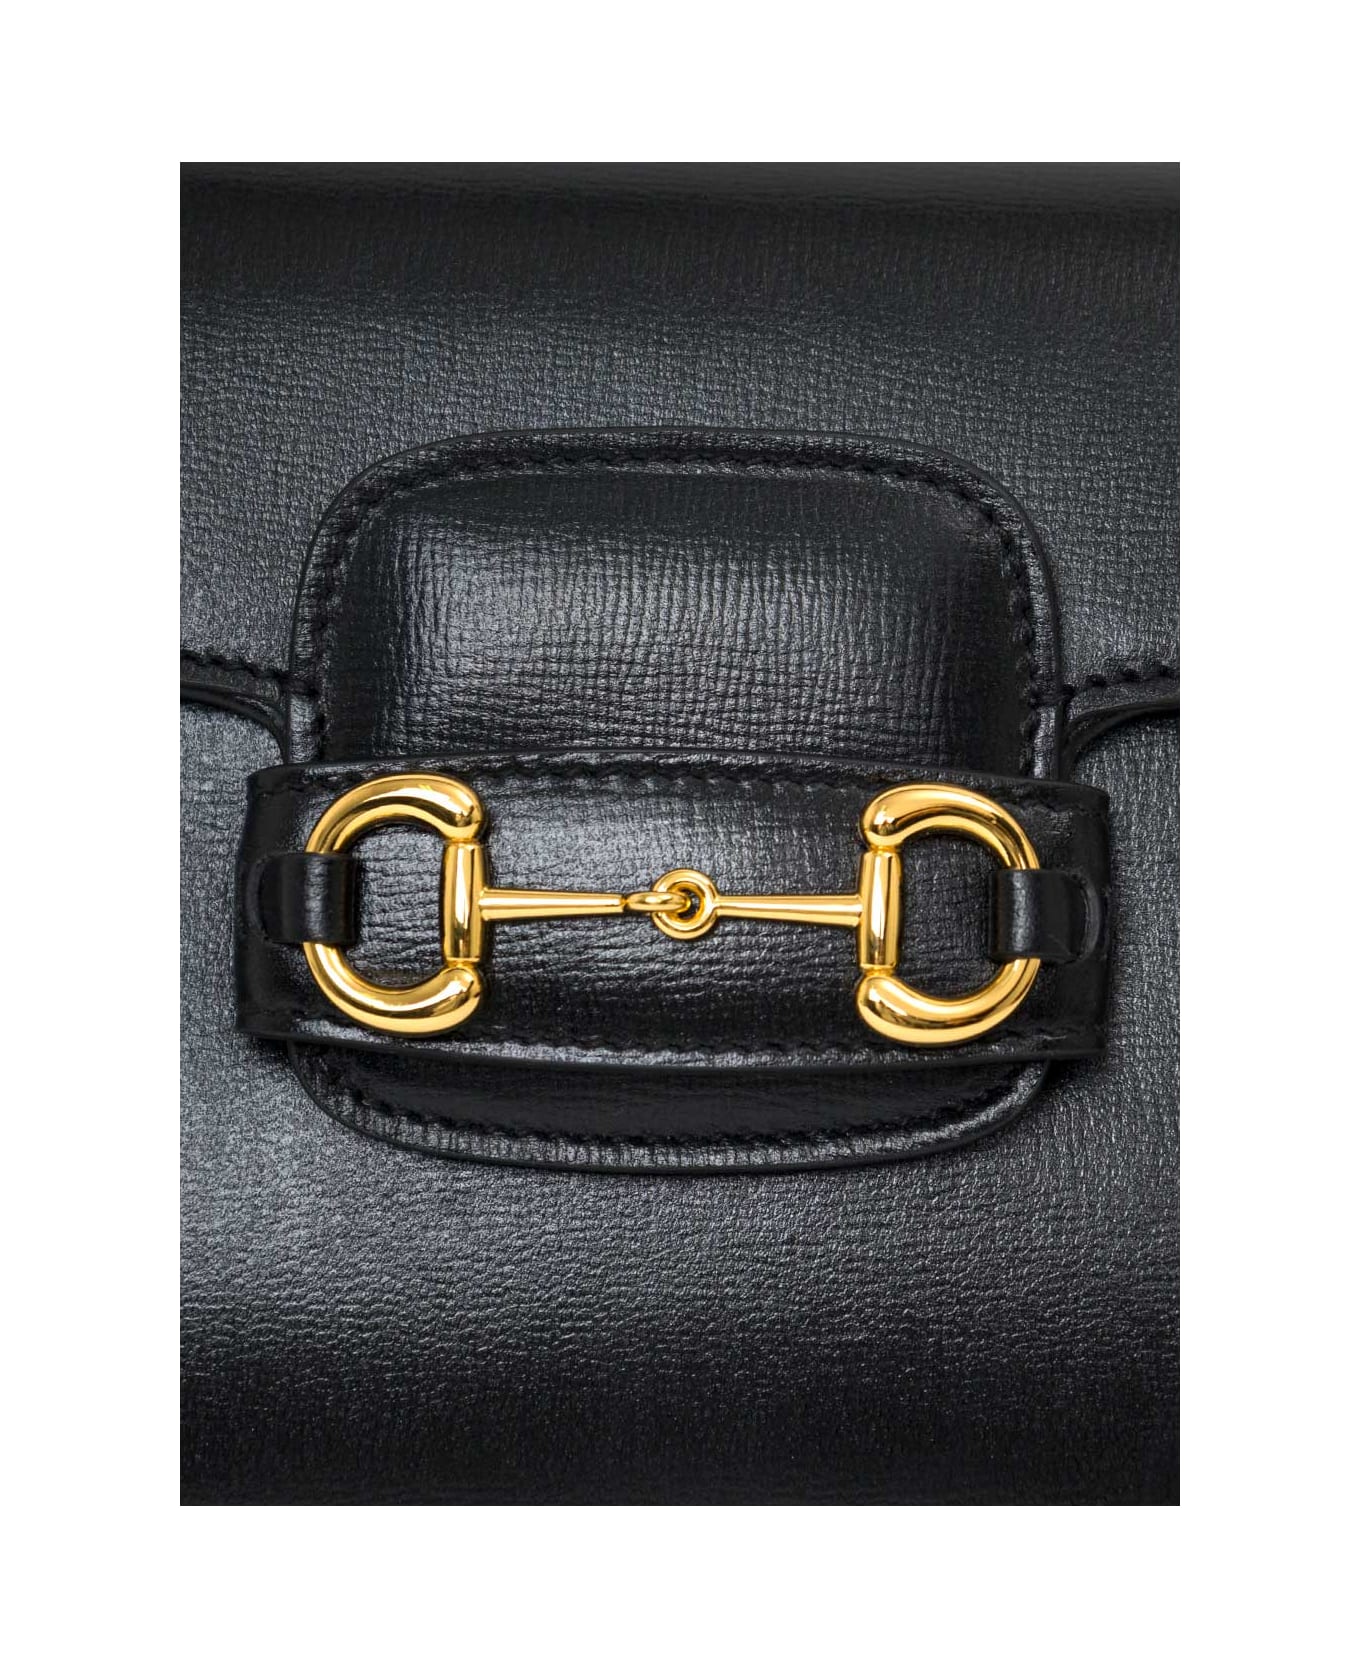 Gucci Woman's Horsebit 1955 Black Leather Crossbody Bag - Black トートバッグ